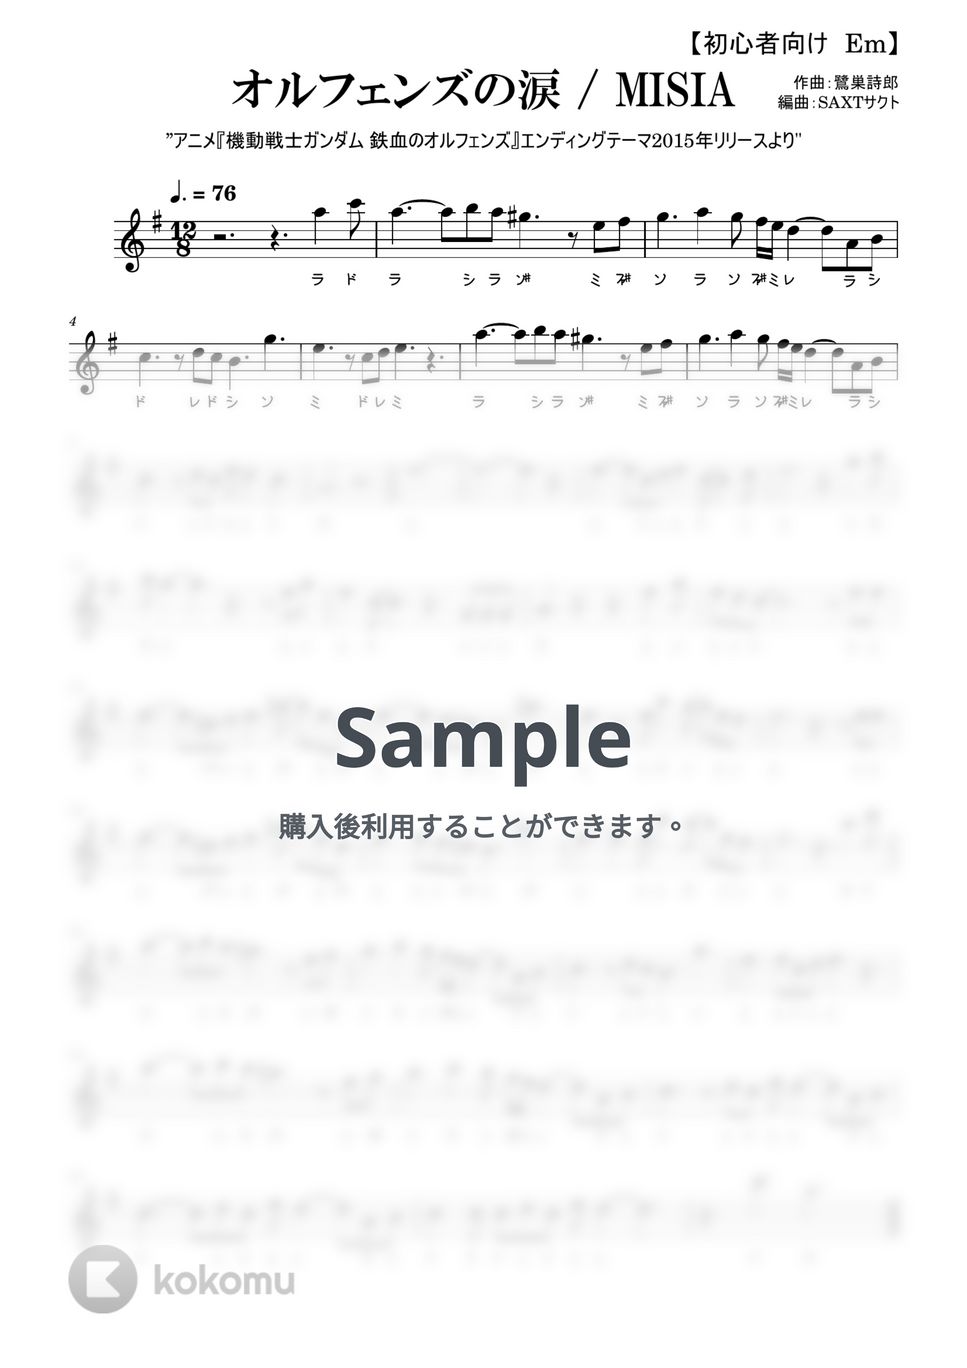 MISIA - オルフェンズの涙 (めちゃラク譜) by SAXT